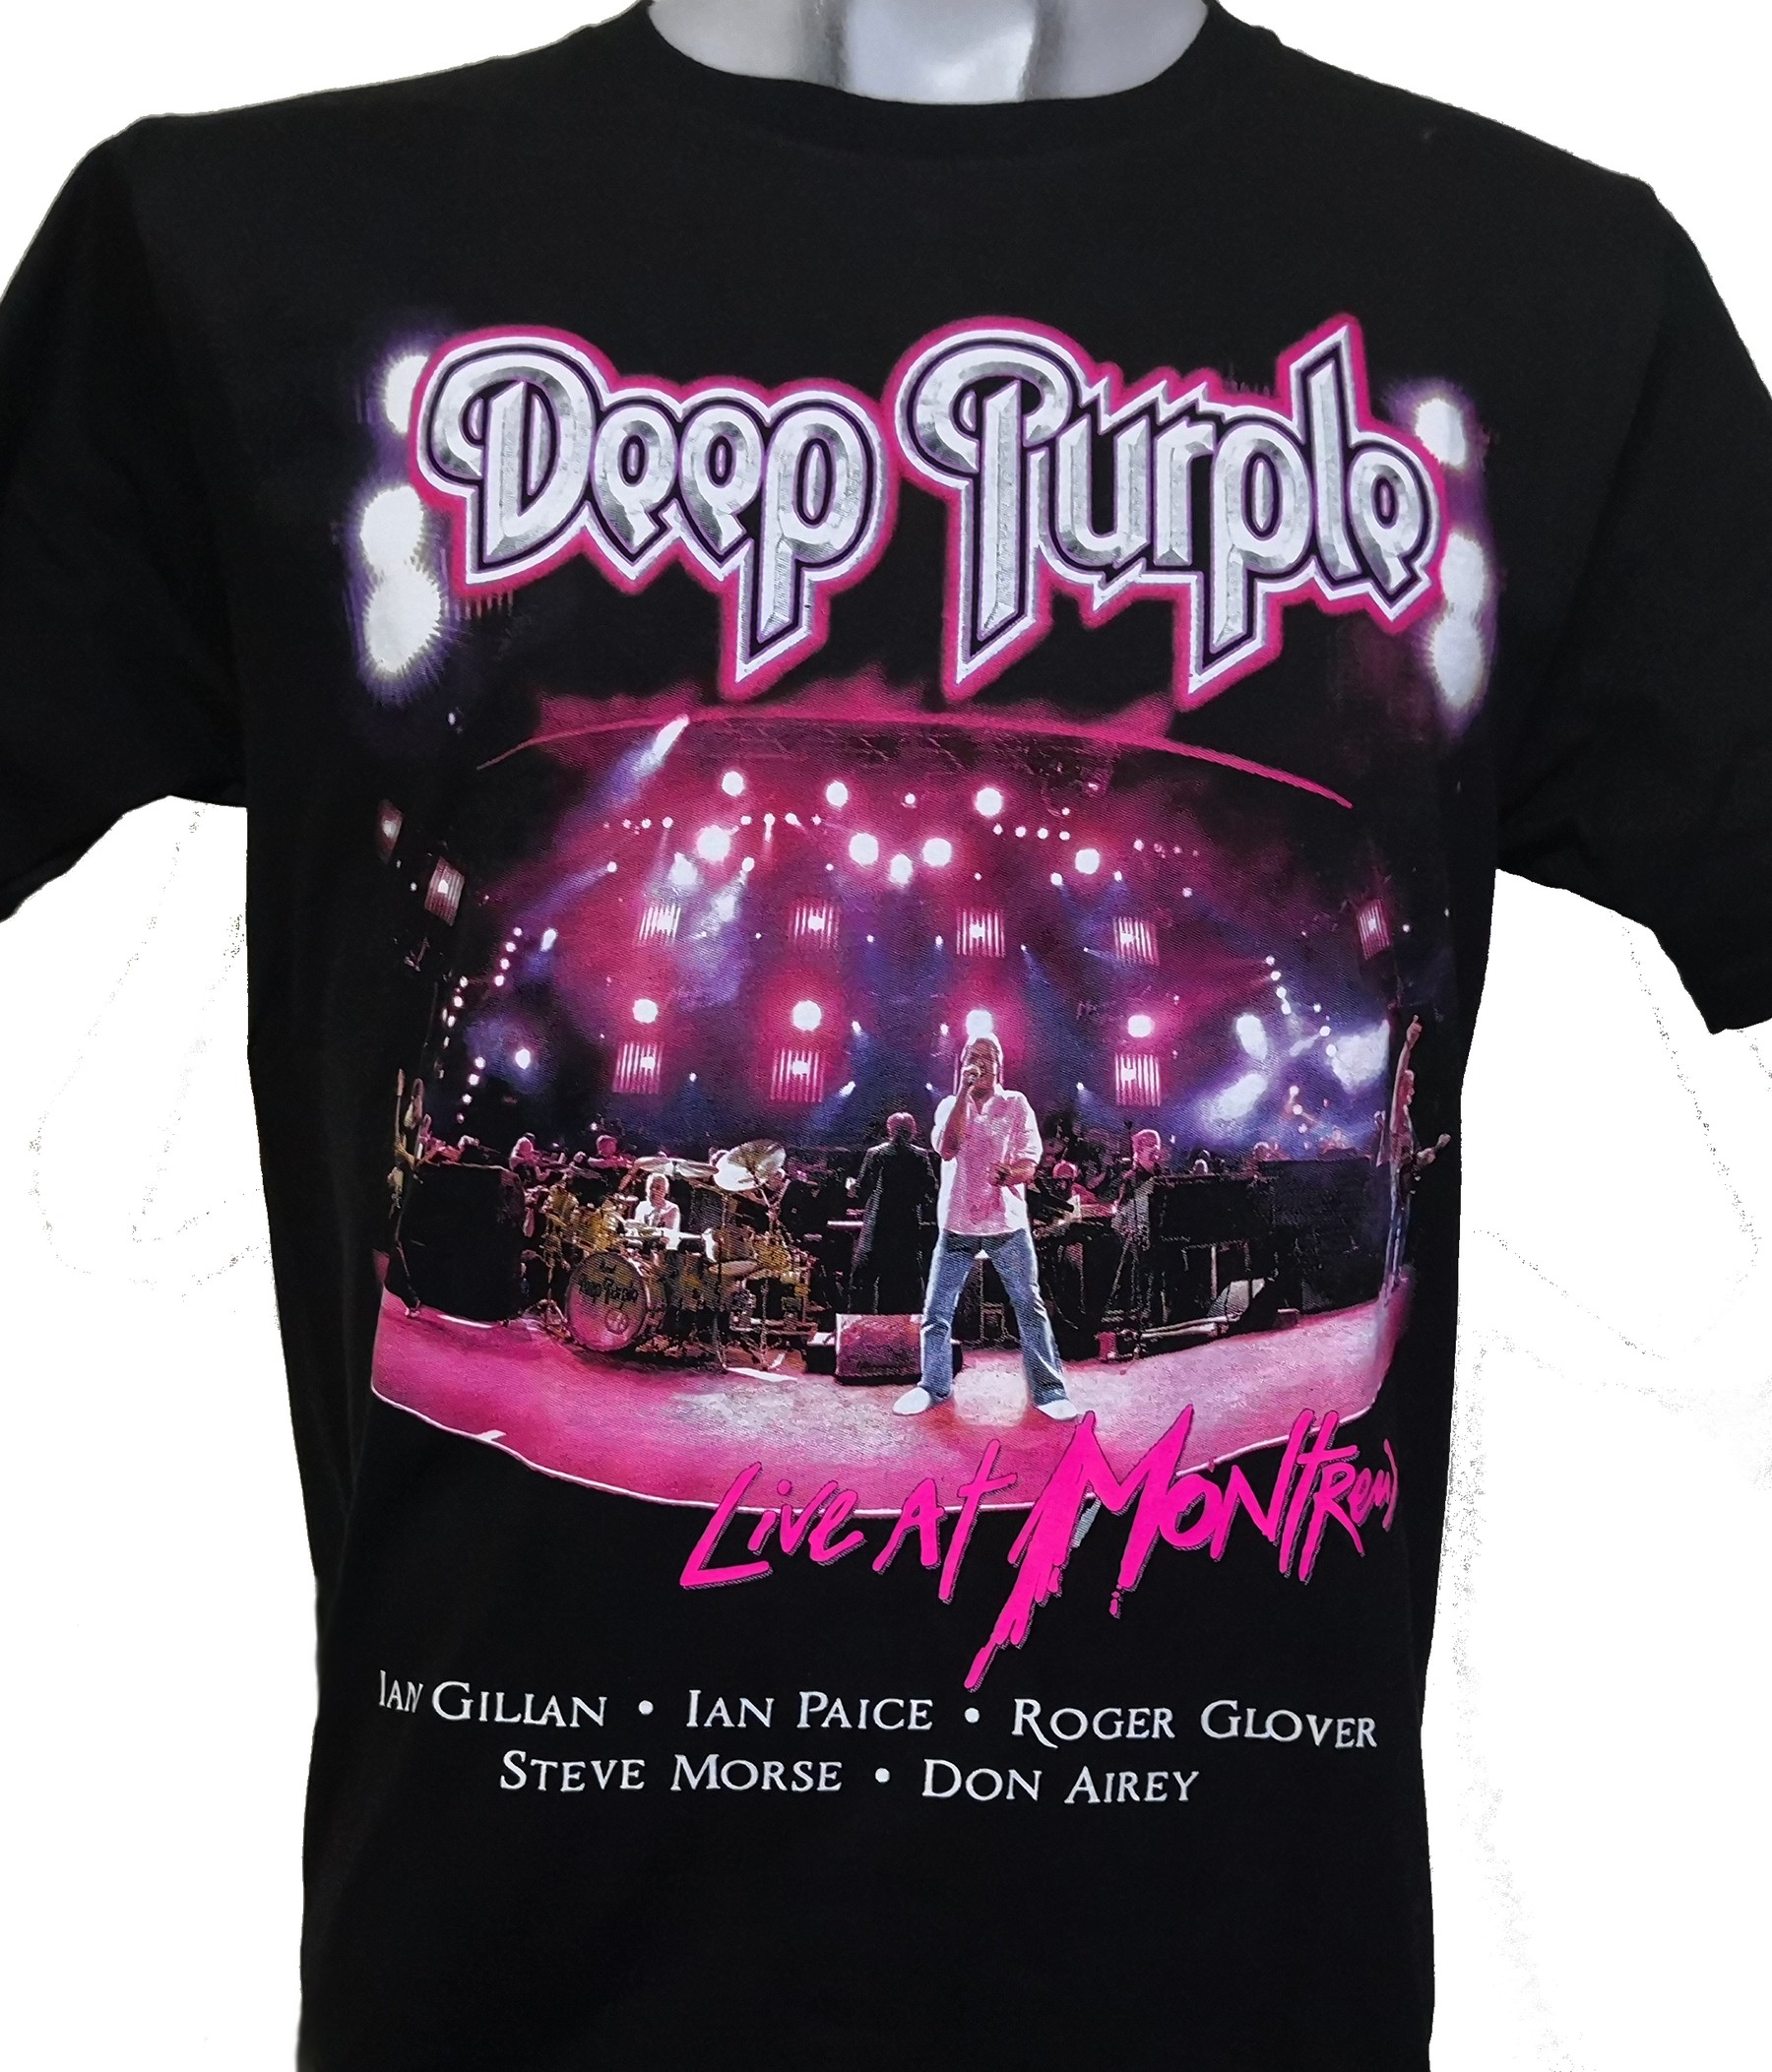 T-SHIRT Deep Purple S-XXXL